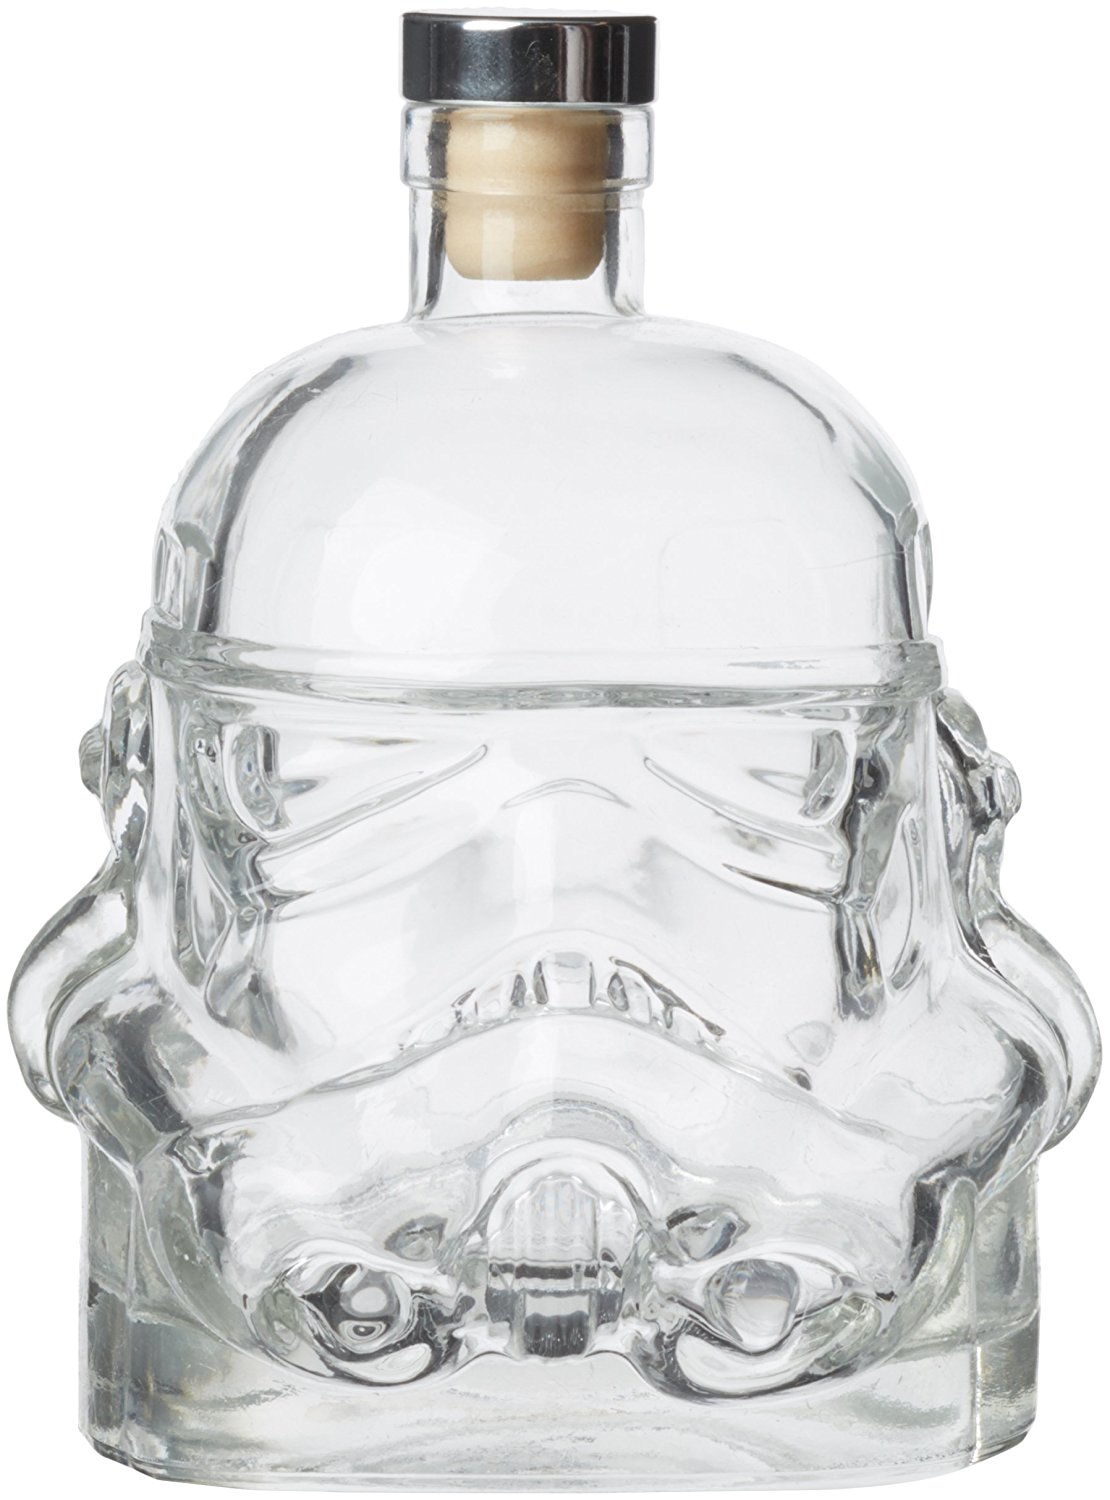 Stormtrooper 的盛酒器也真比較少見，但也真過癮，看著酒慢慢的倒出來，就如Stormtrooper的能量漸漸用完一樣。